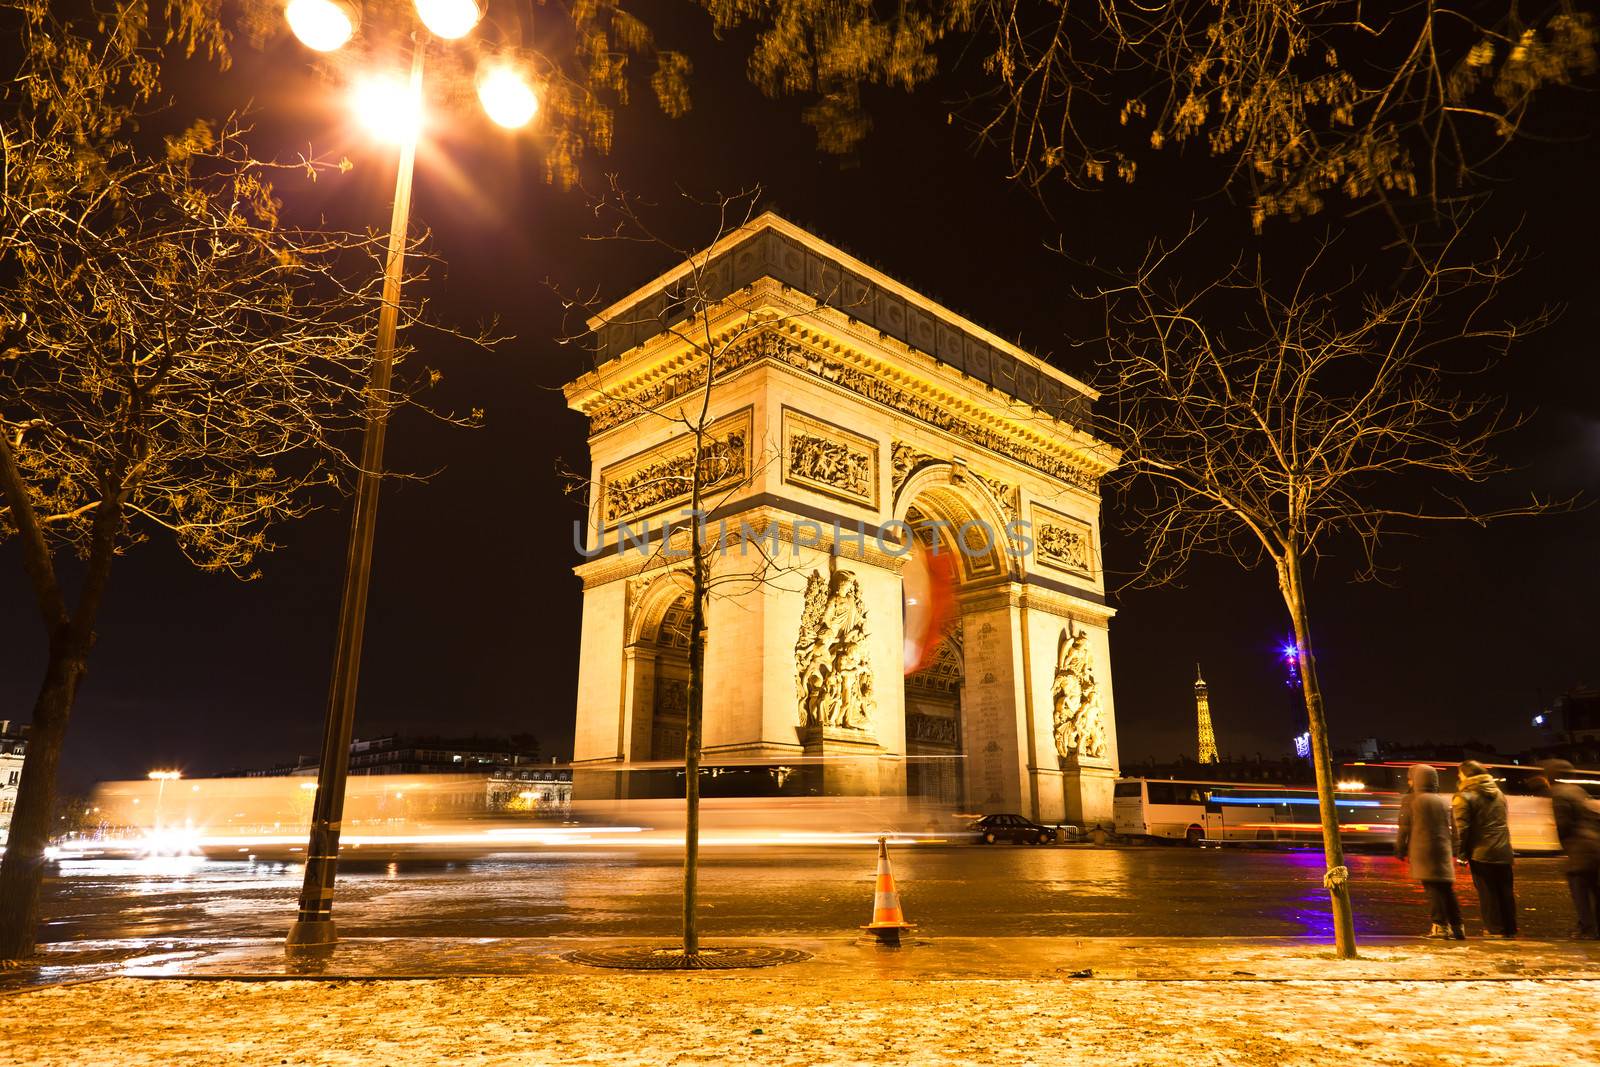 The Arc de Triomphe in Paris by gary718